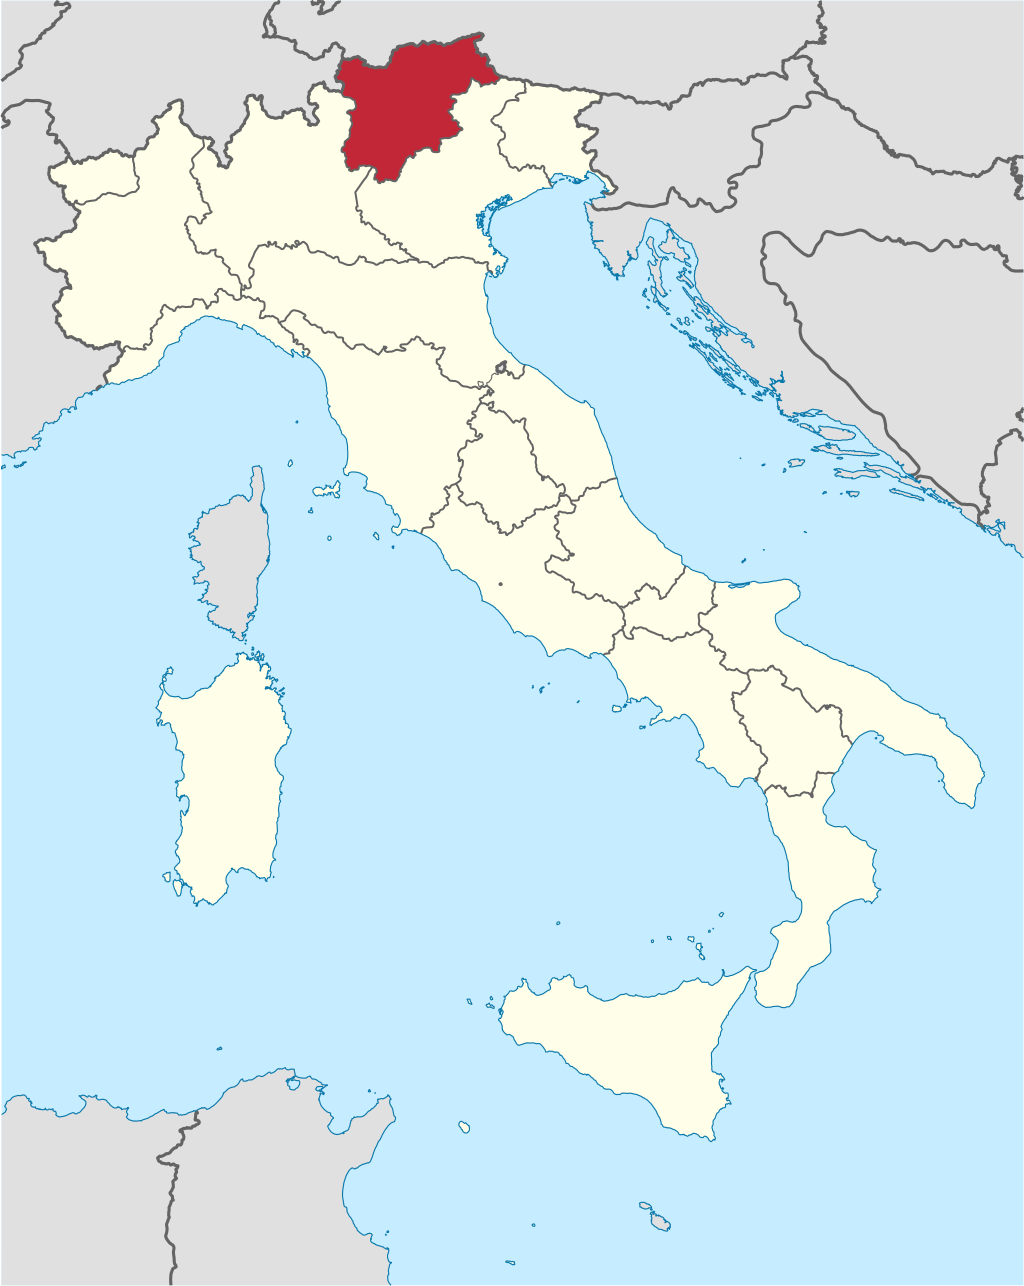 Trio Houses Urbex location or around the region Trentino Alto Adige (Trentino), Italy